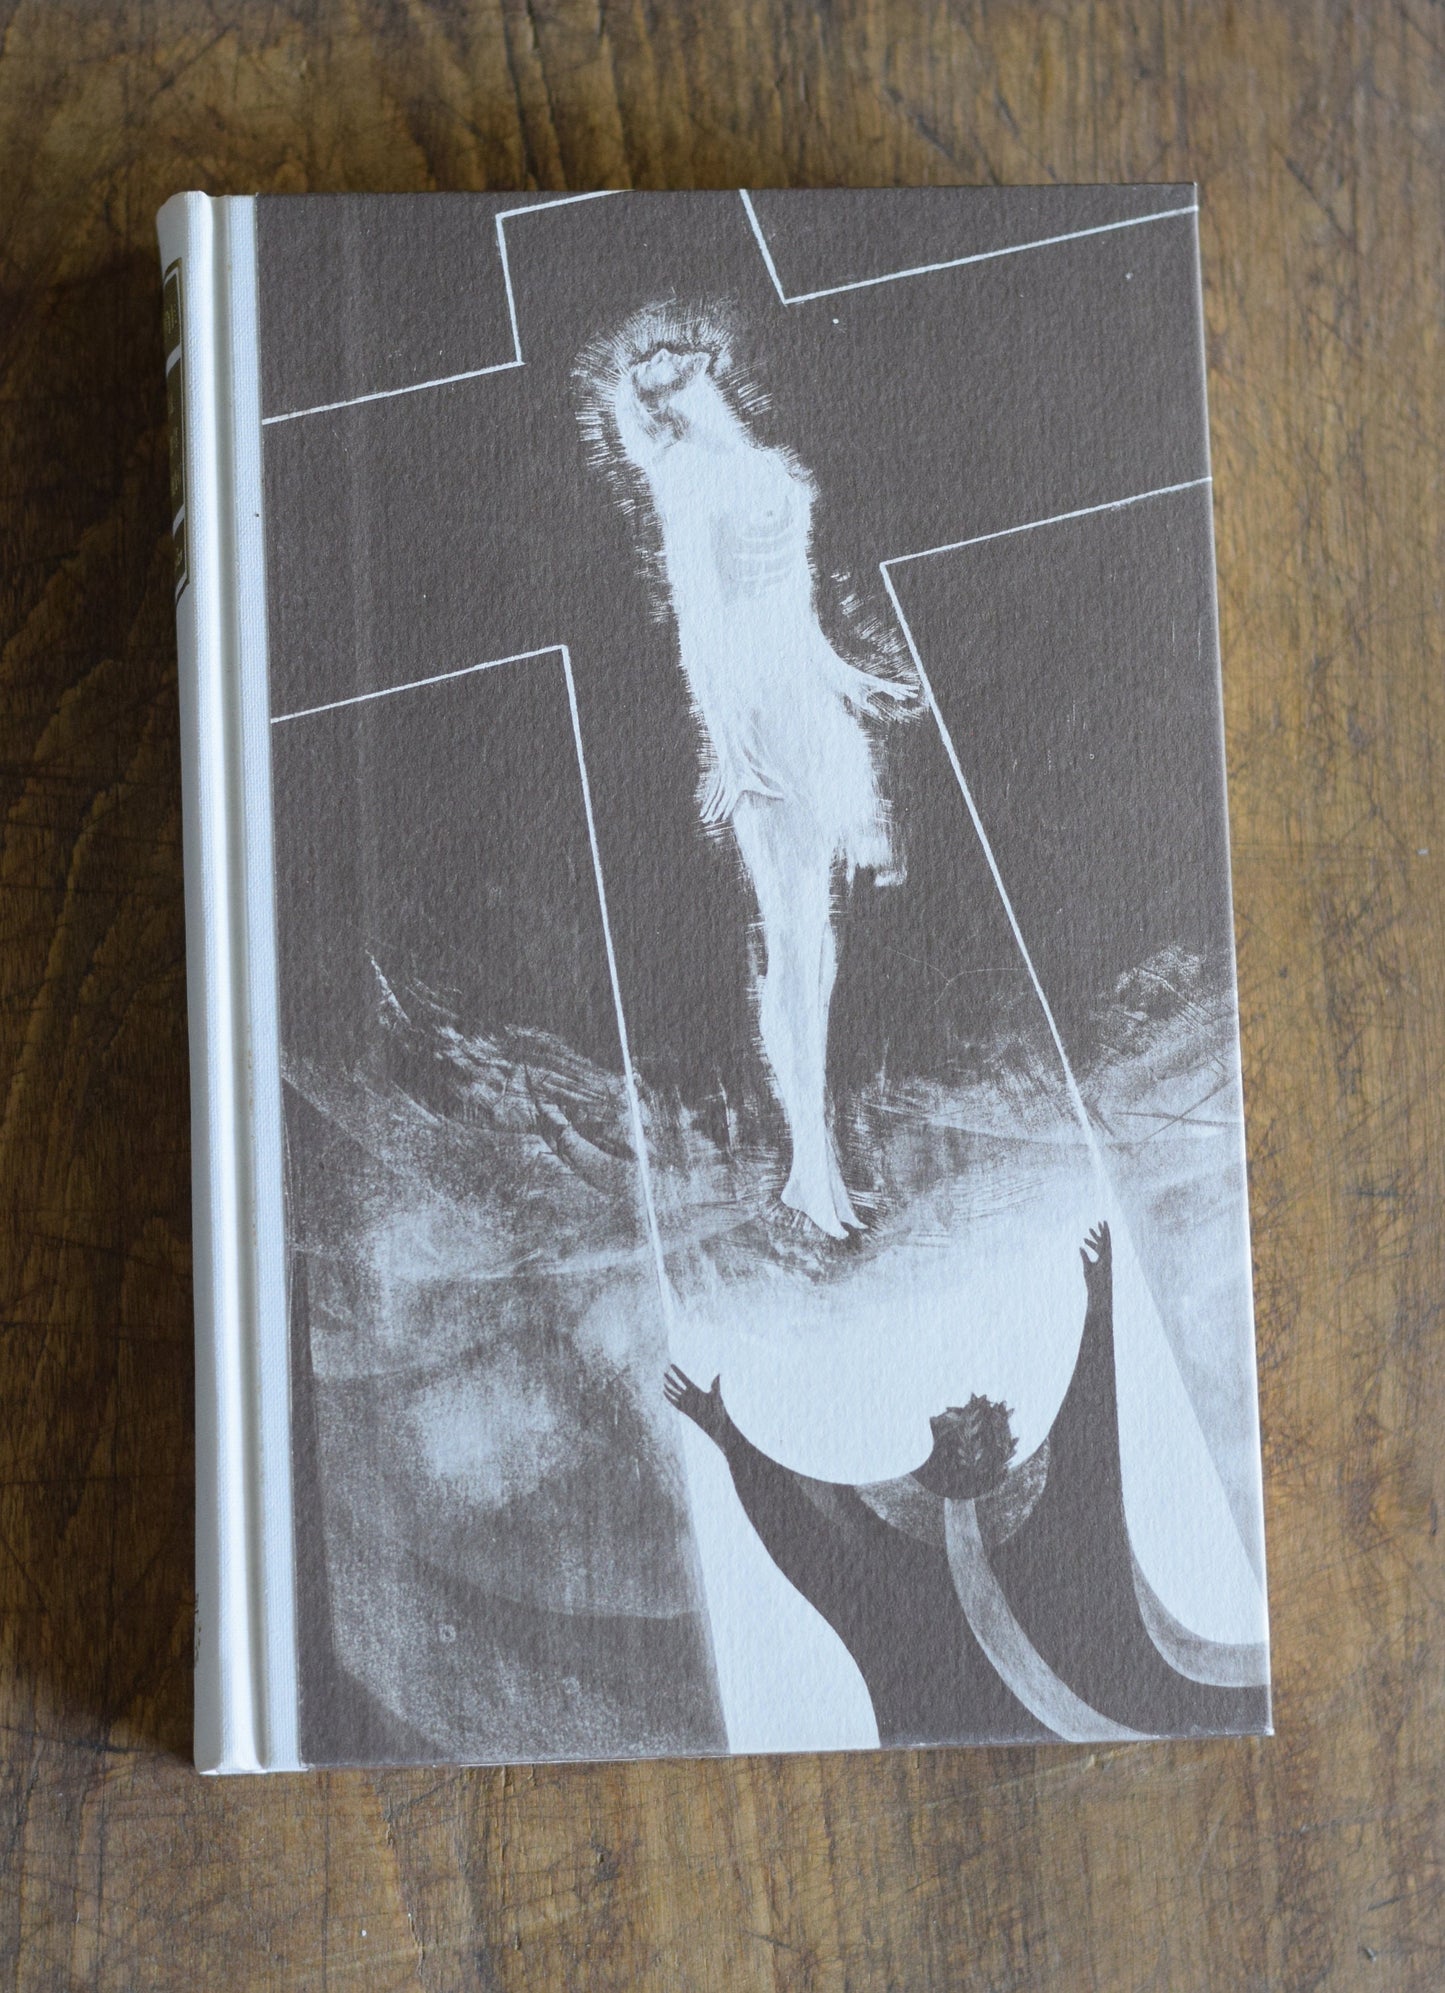 Vintage Fiction Hardback Novel: Dante Alighieri - The Divine Comedy, 3 Volume set in slipcase